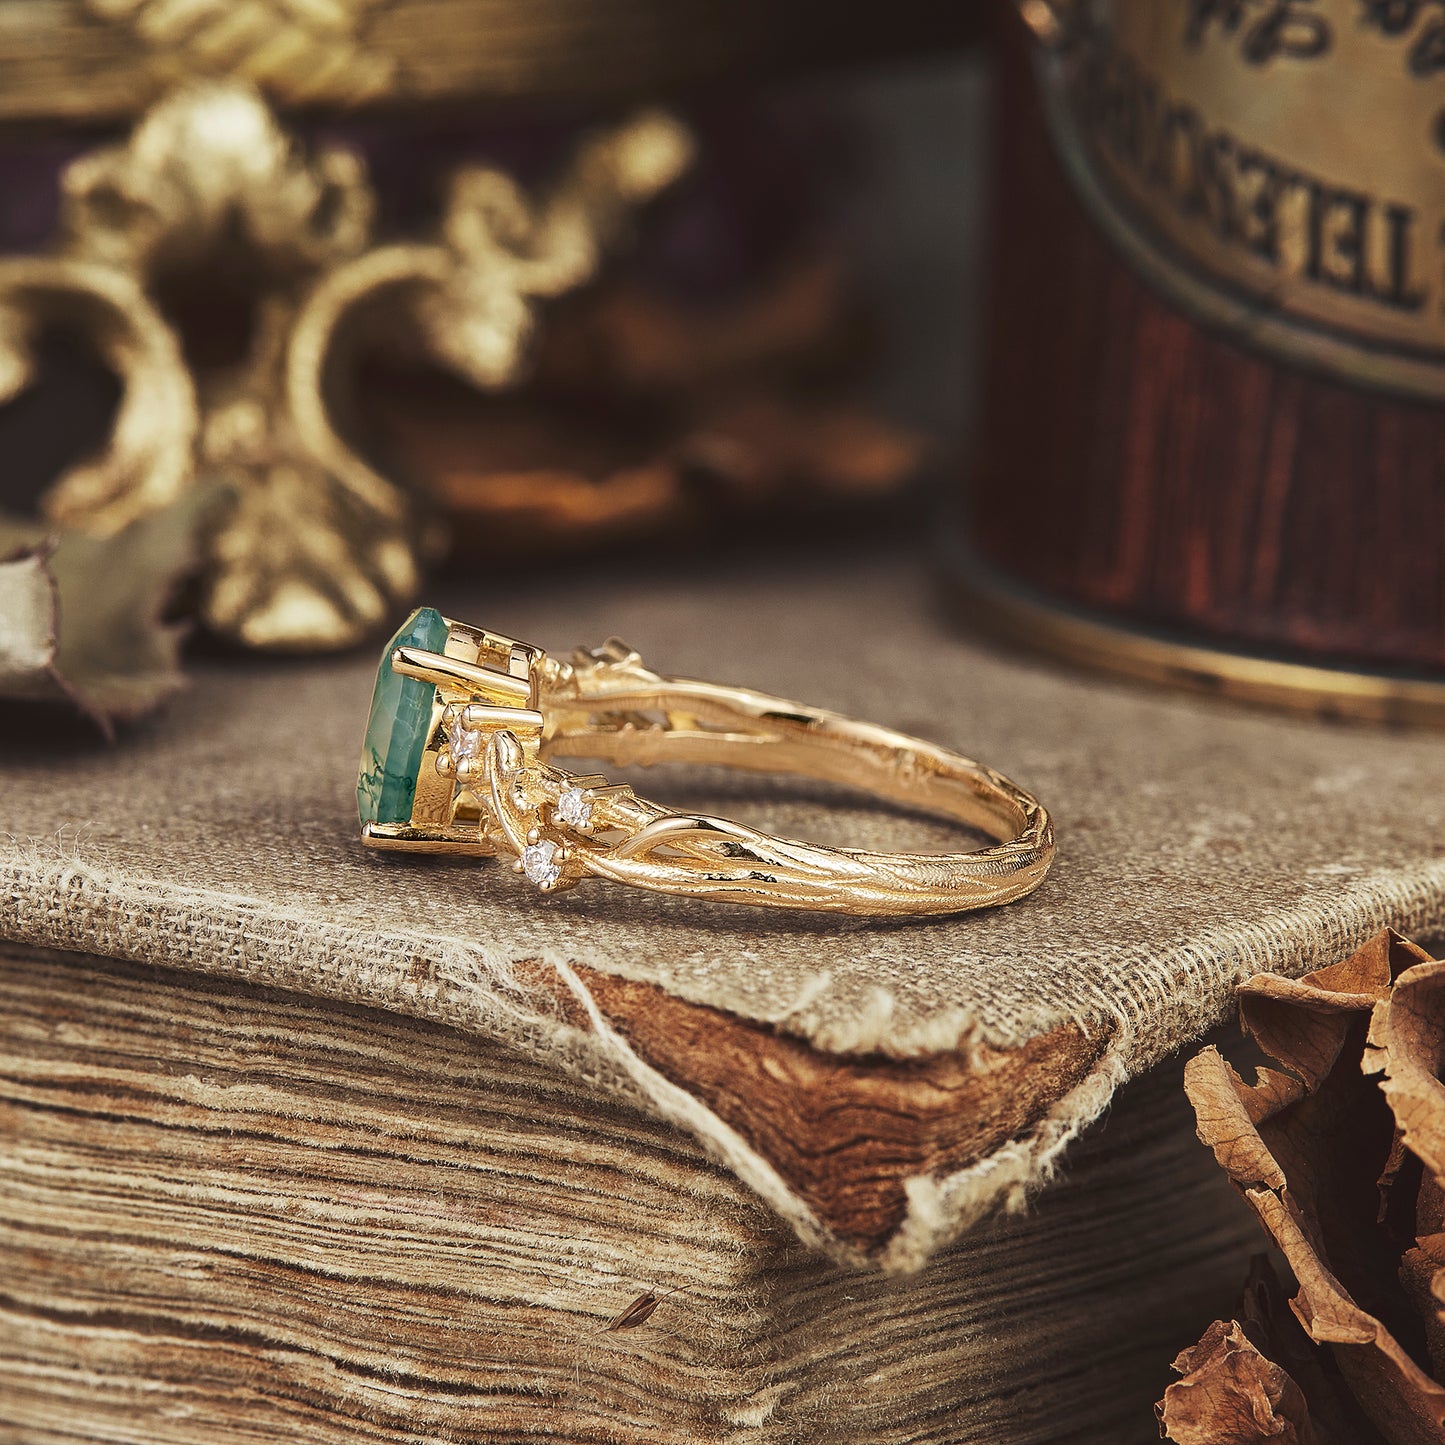 Maple Leaf Design Inspired Engagement Ring - Ariel